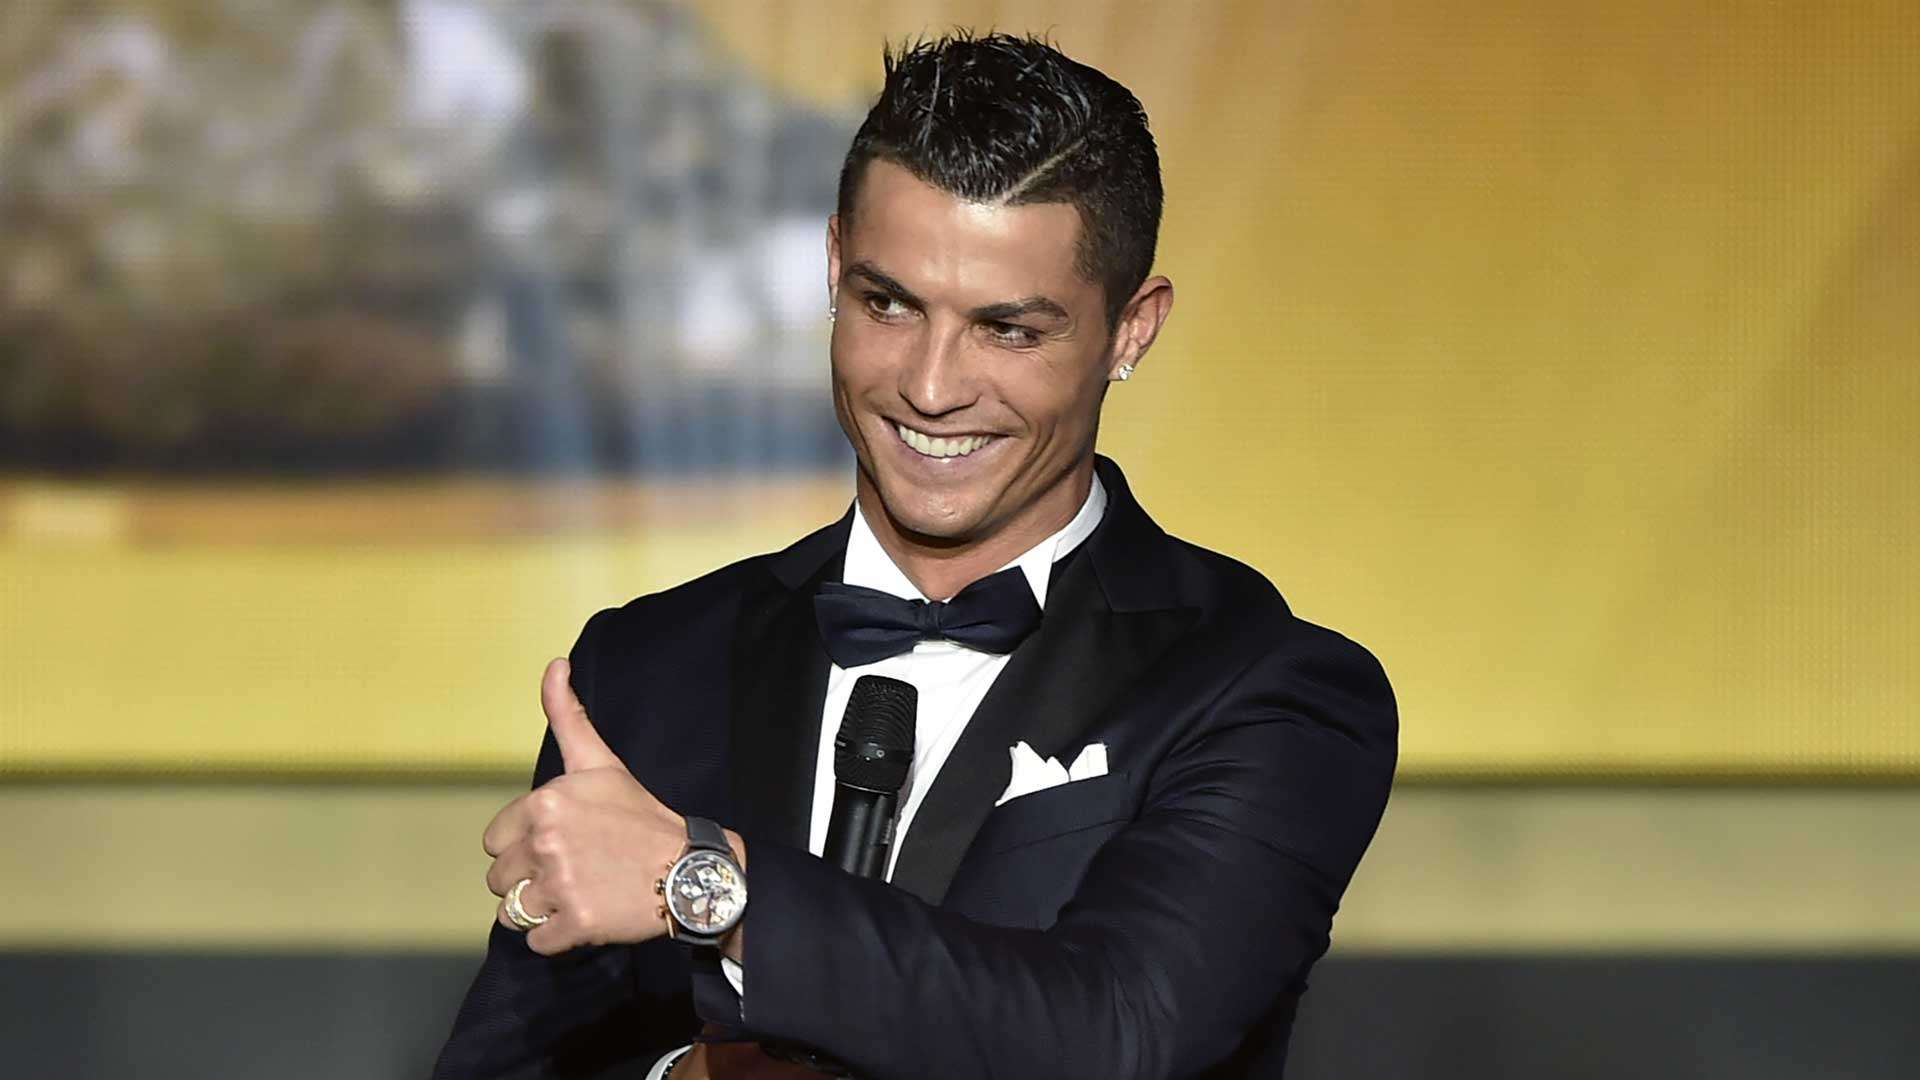 Cristiano Ronaldo accepts the Balon d'Or